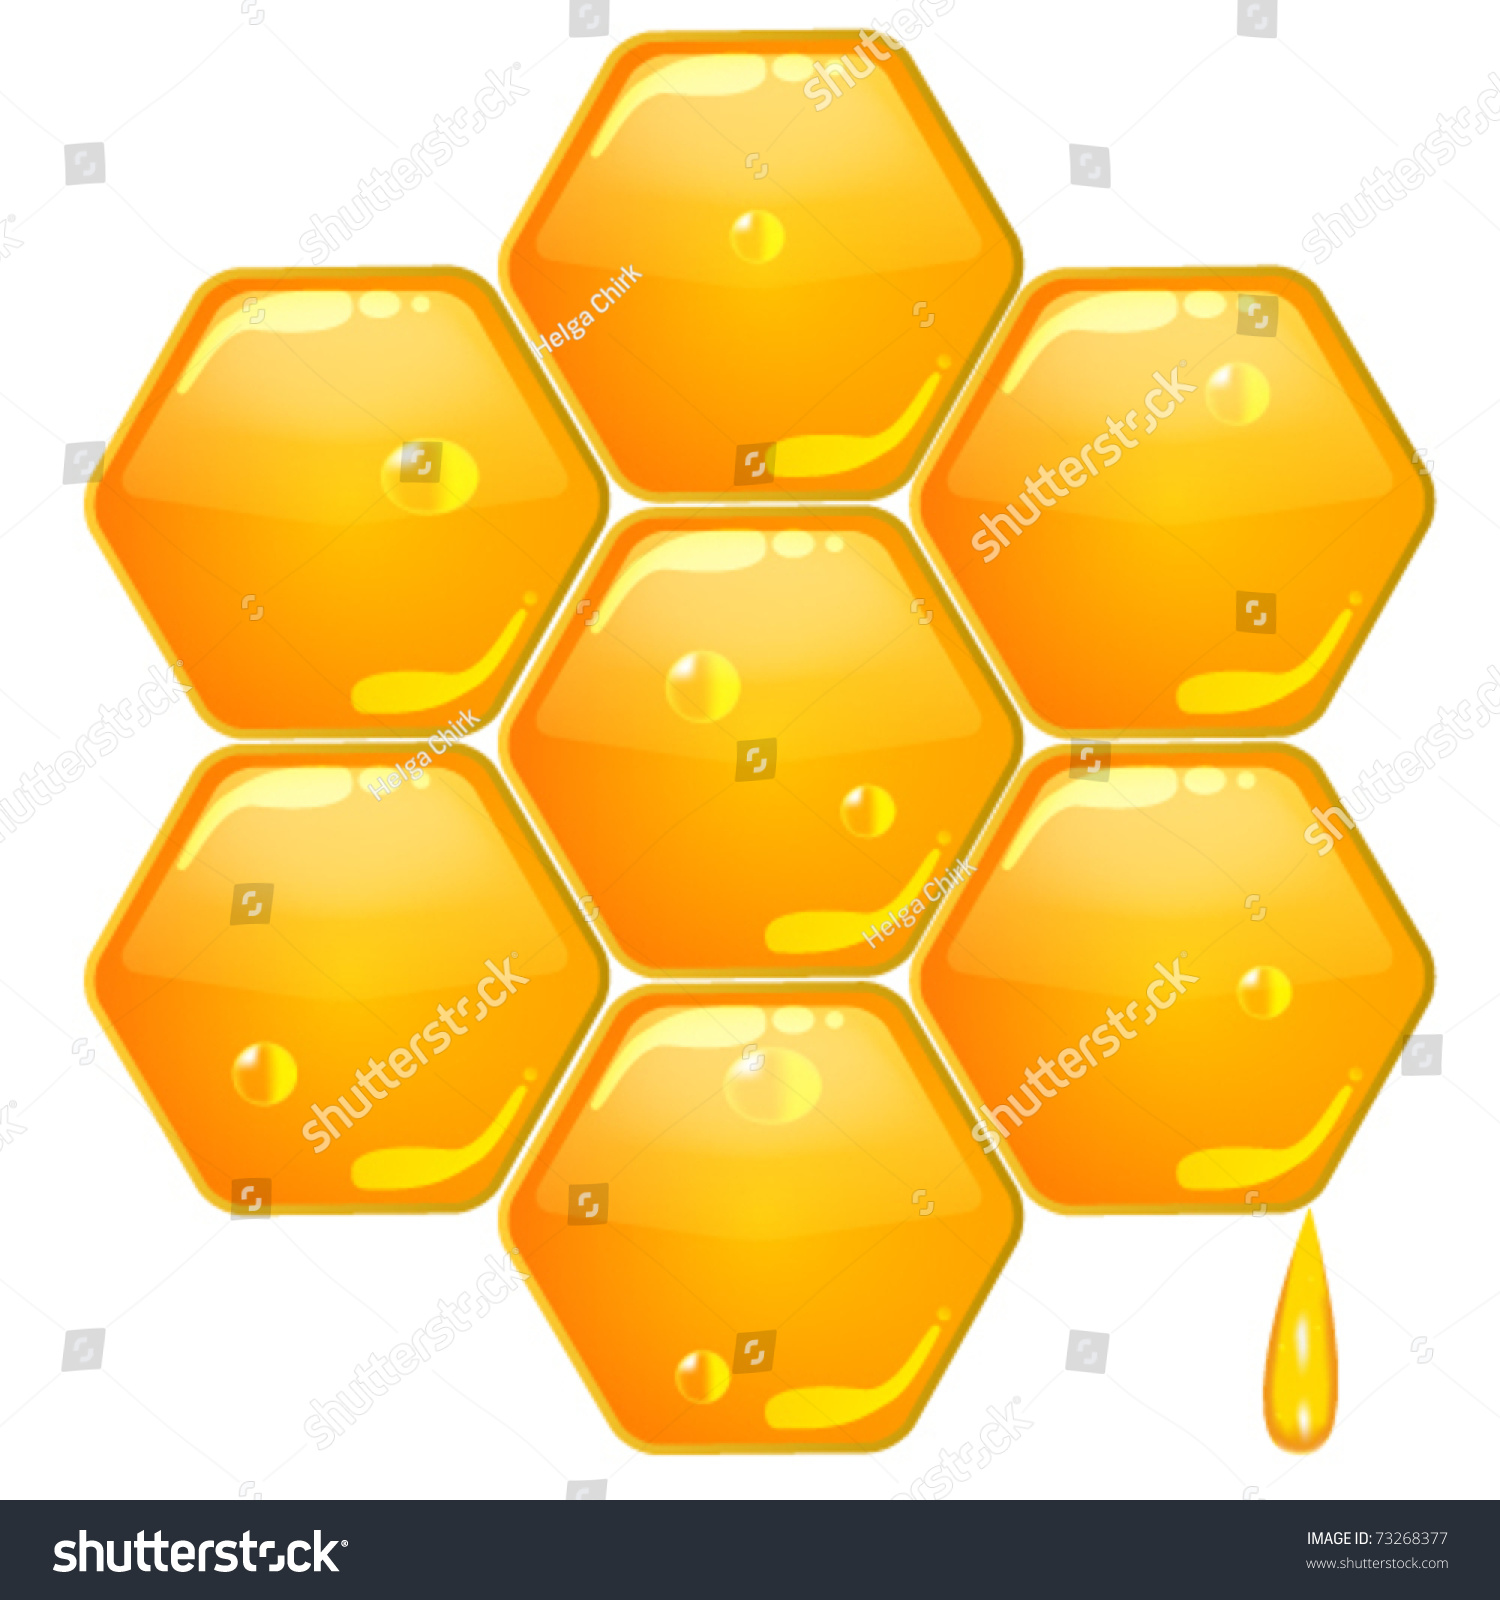 Honeycomb Stock Vector Illustration 73268377 : Shutterstock